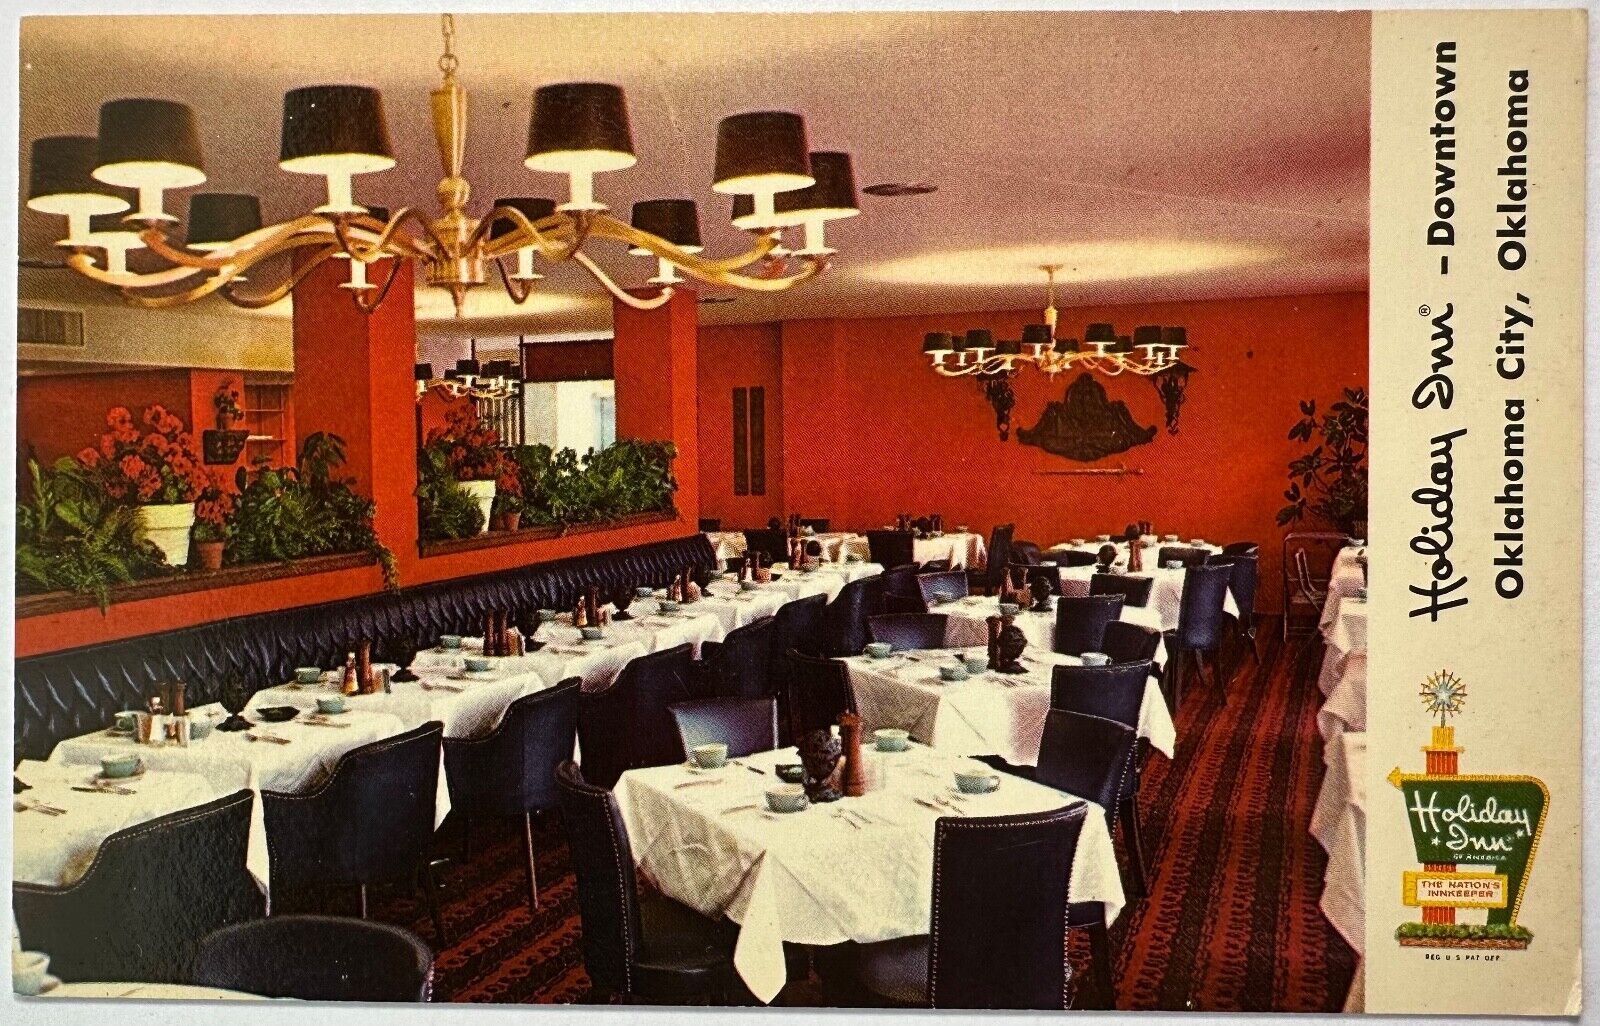 Holiday Inn La Fiesta Restaurant Oklahoma City Postcard c1950s